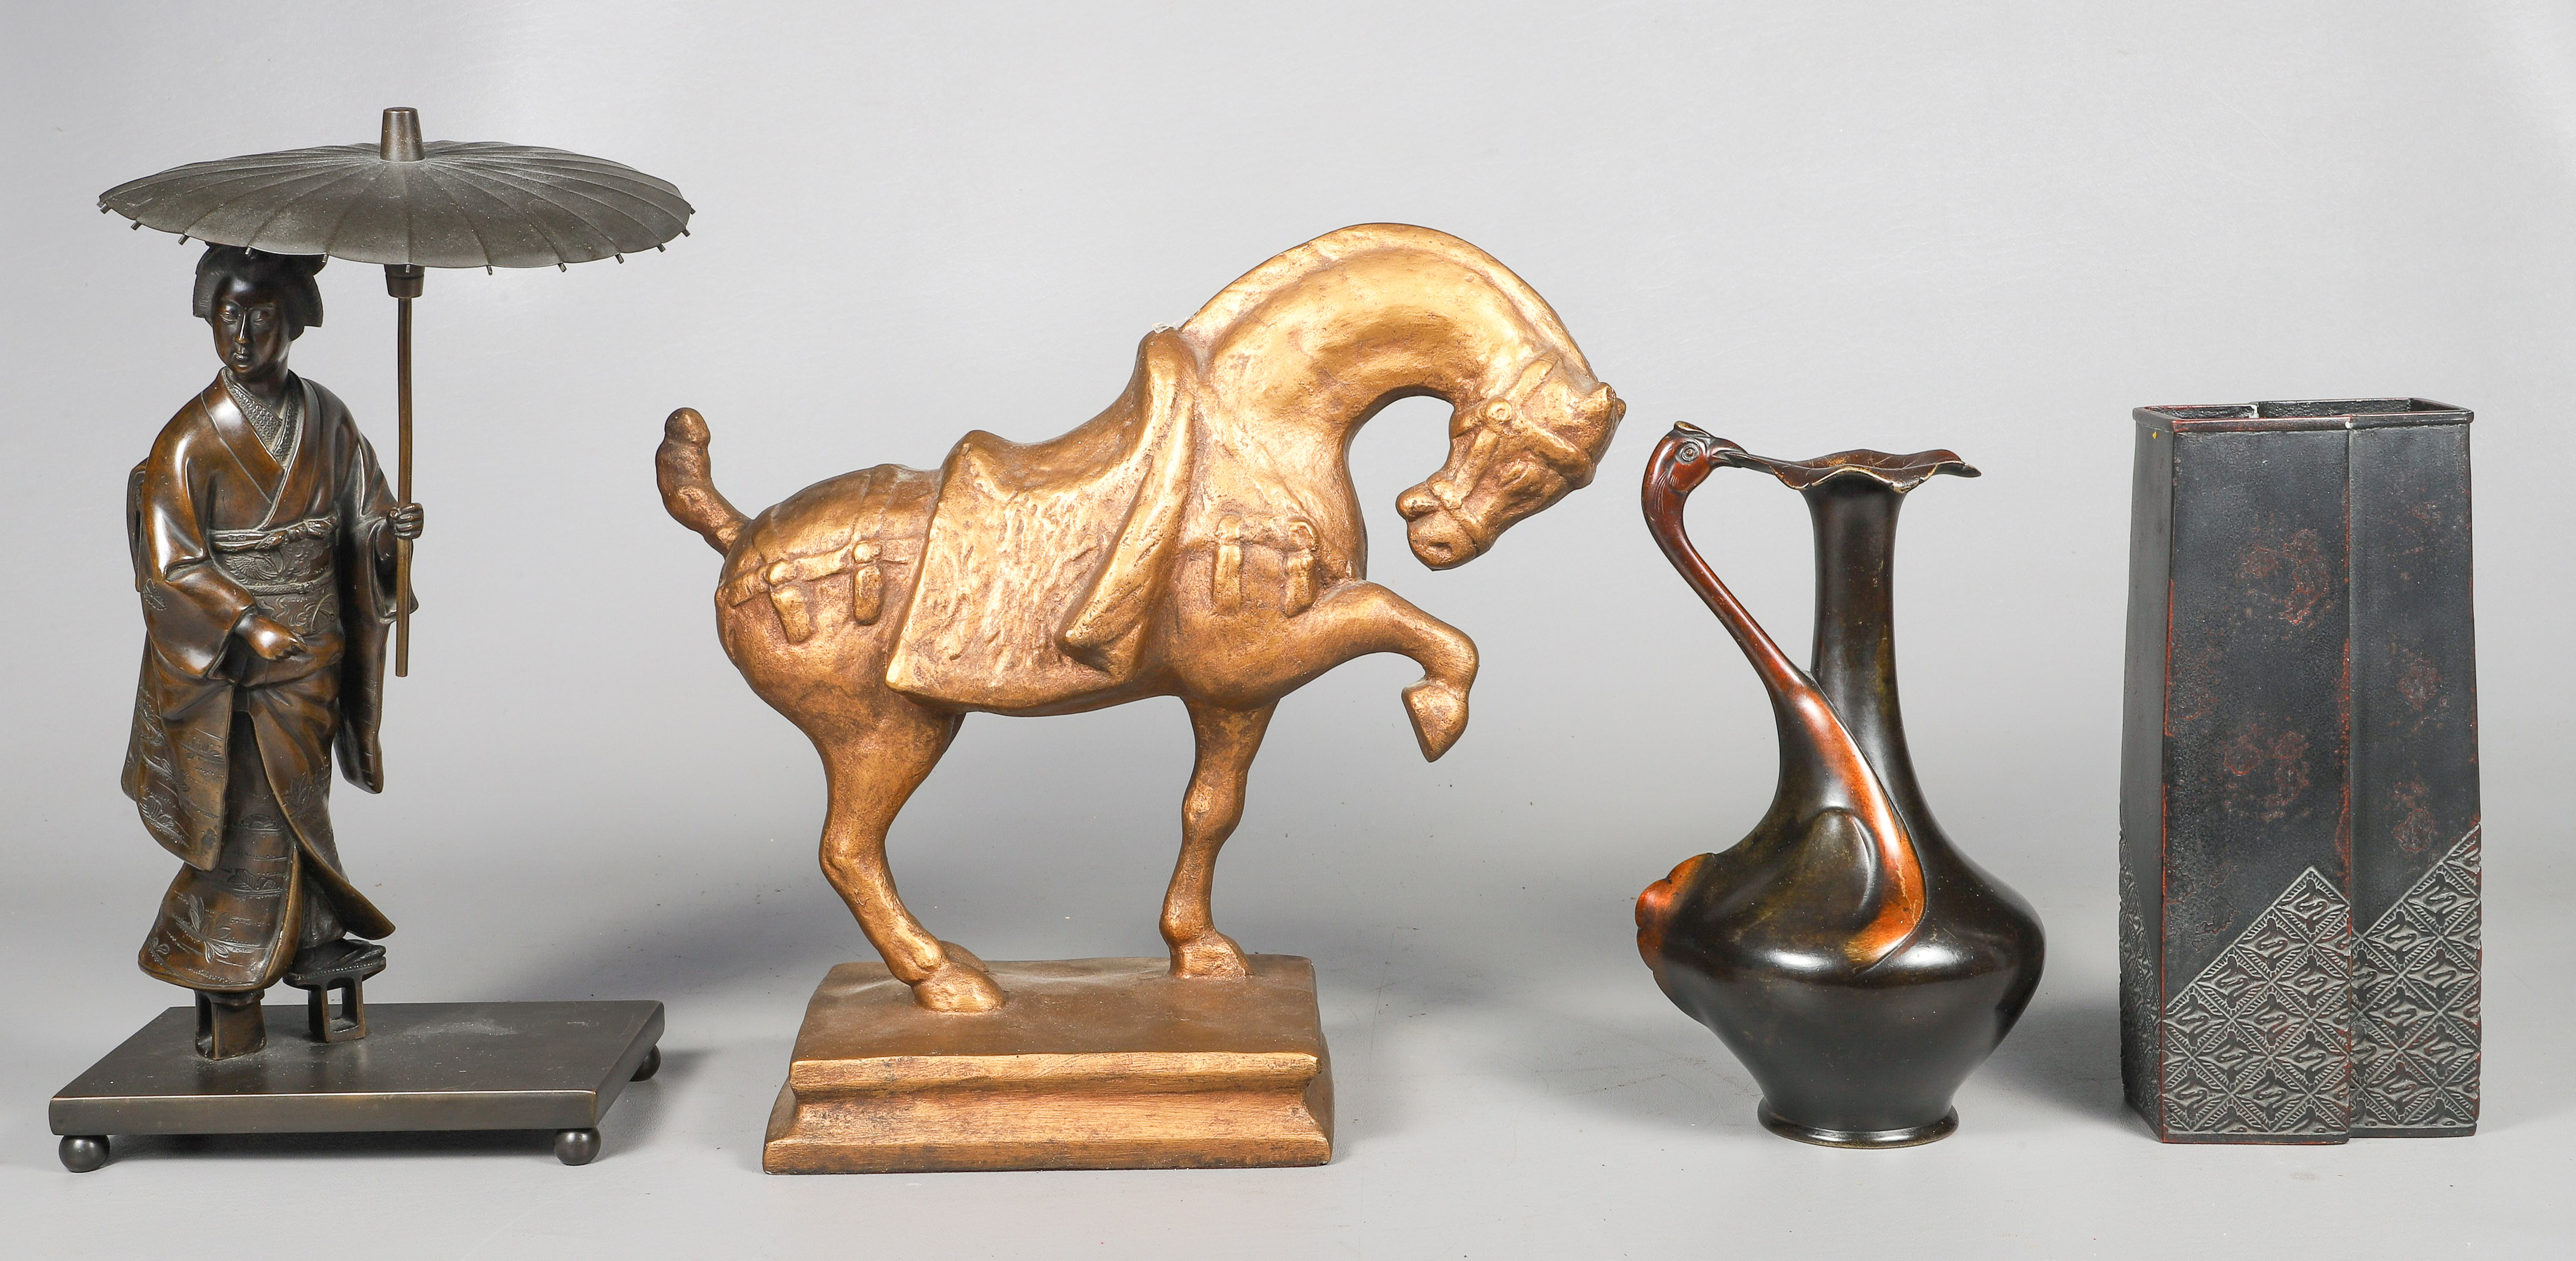  4 Bronze tone vessels and sculpture 31806f